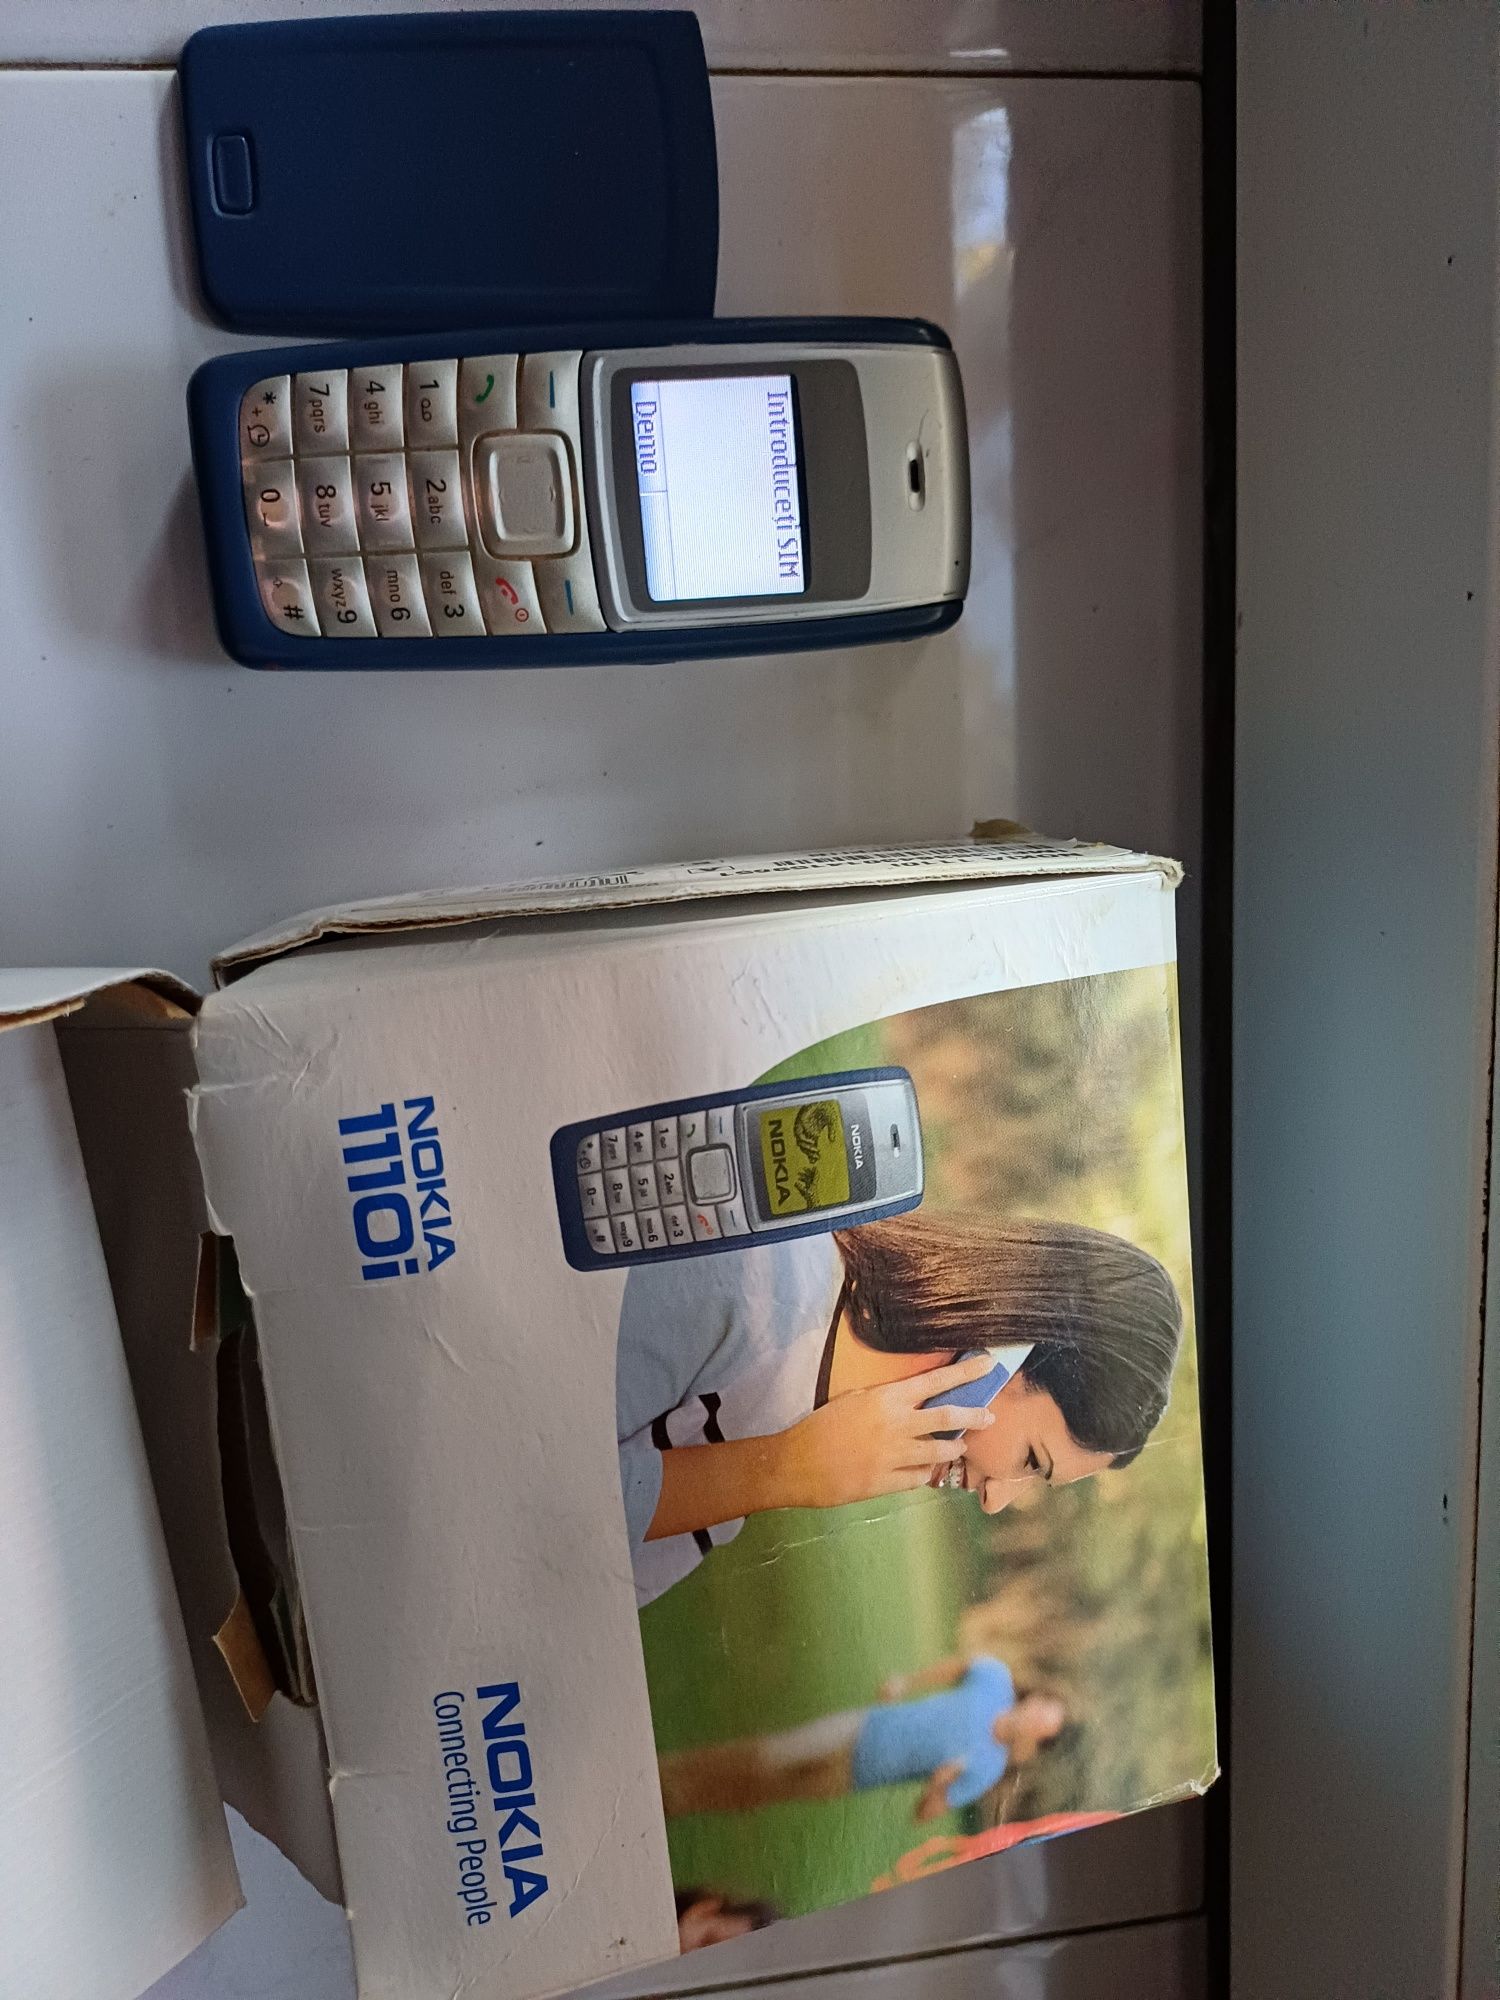 Nokia c2-01 și Nokia 1110